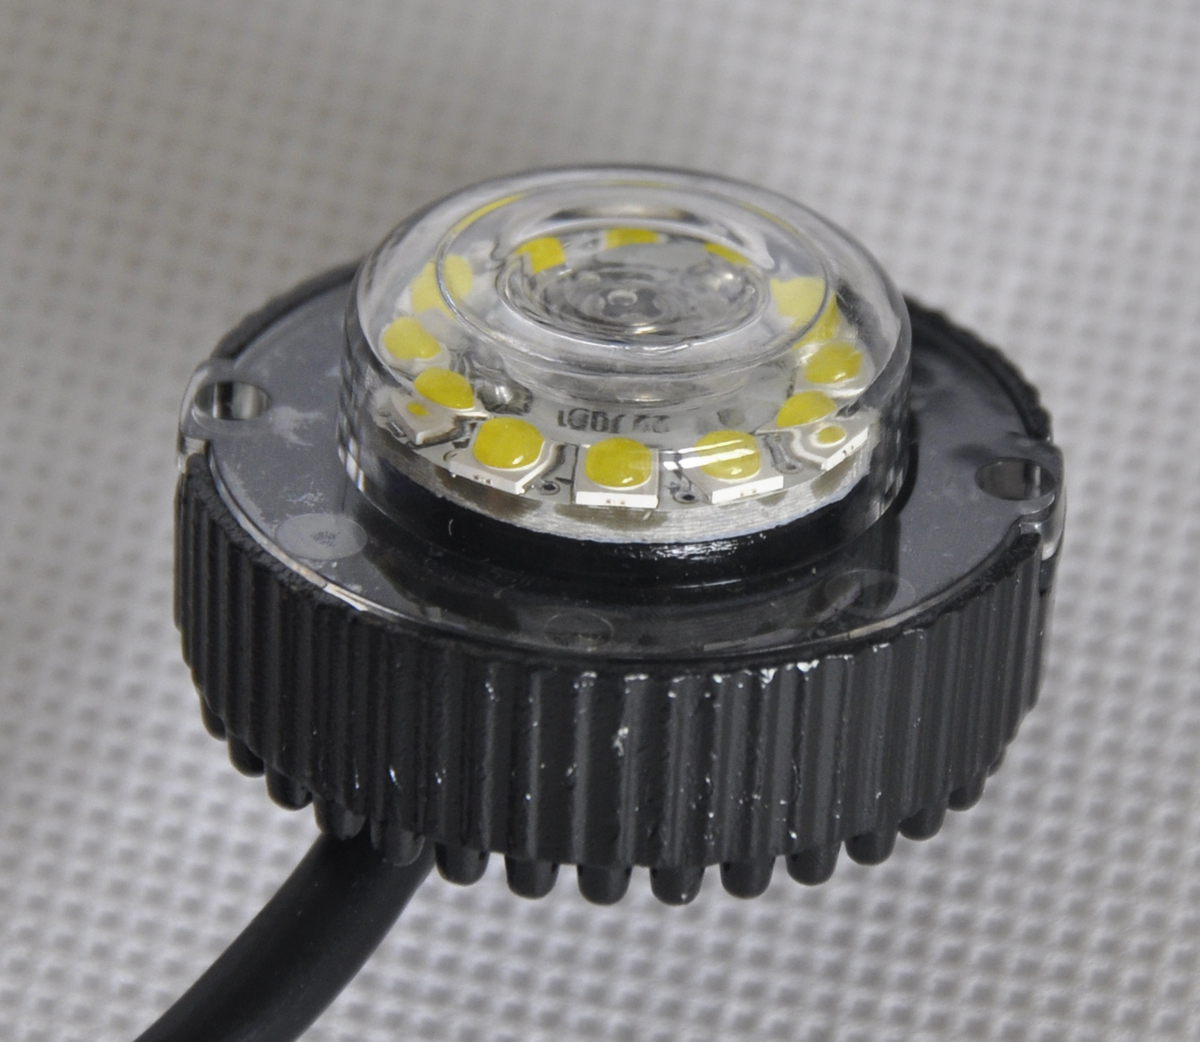 LTD-306 LED hideaway light